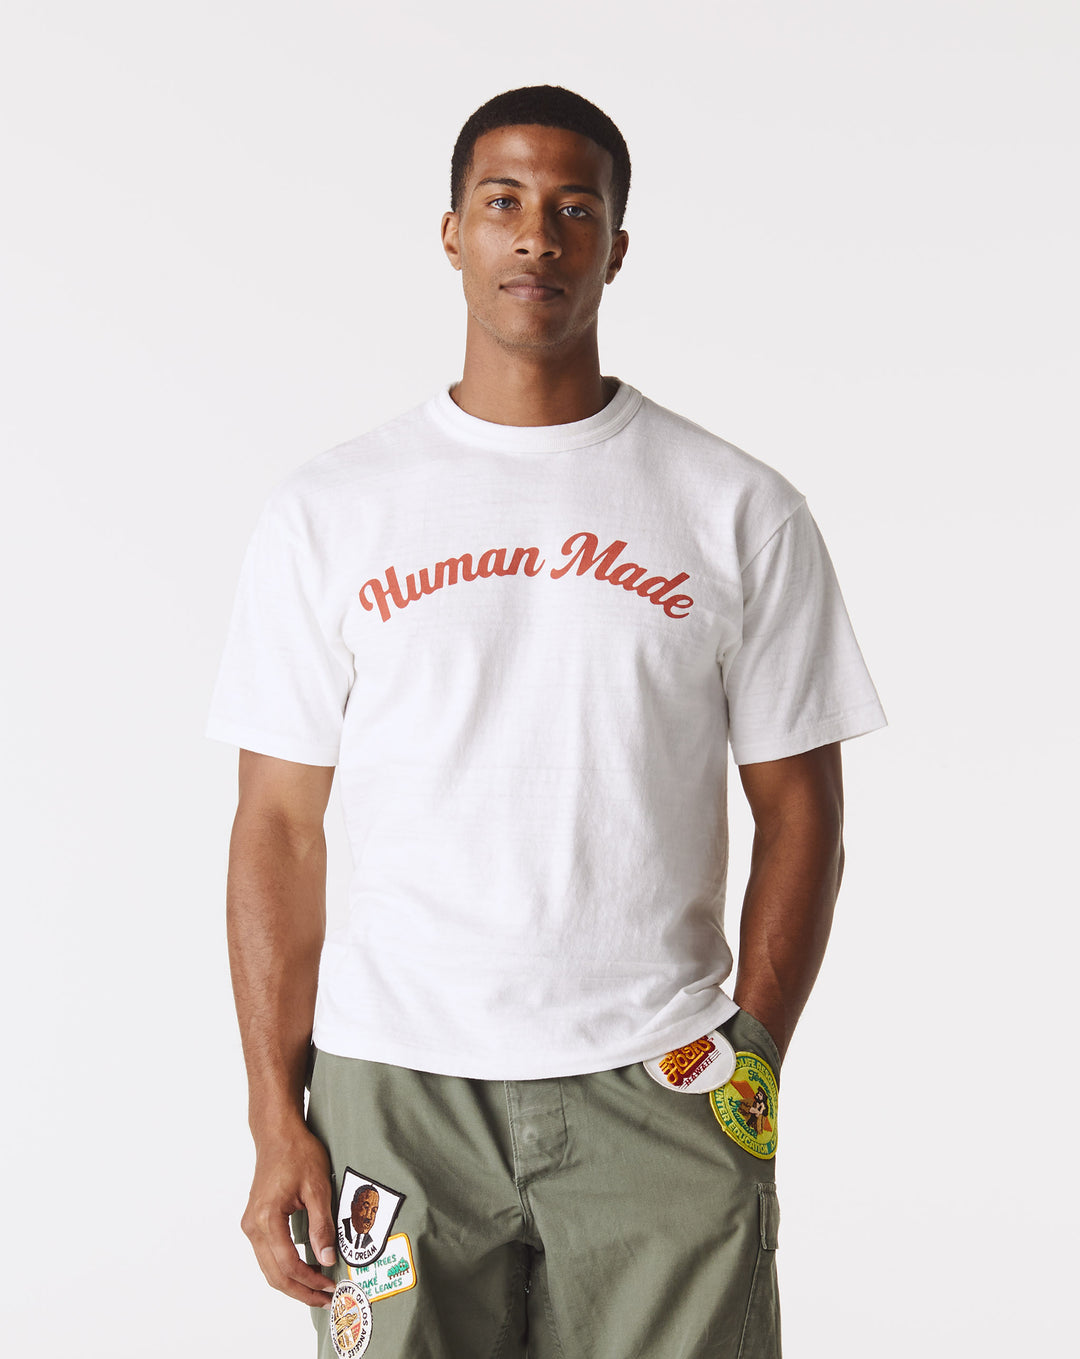 Human Made Graphic T-Shirt #09  - XHIBITION